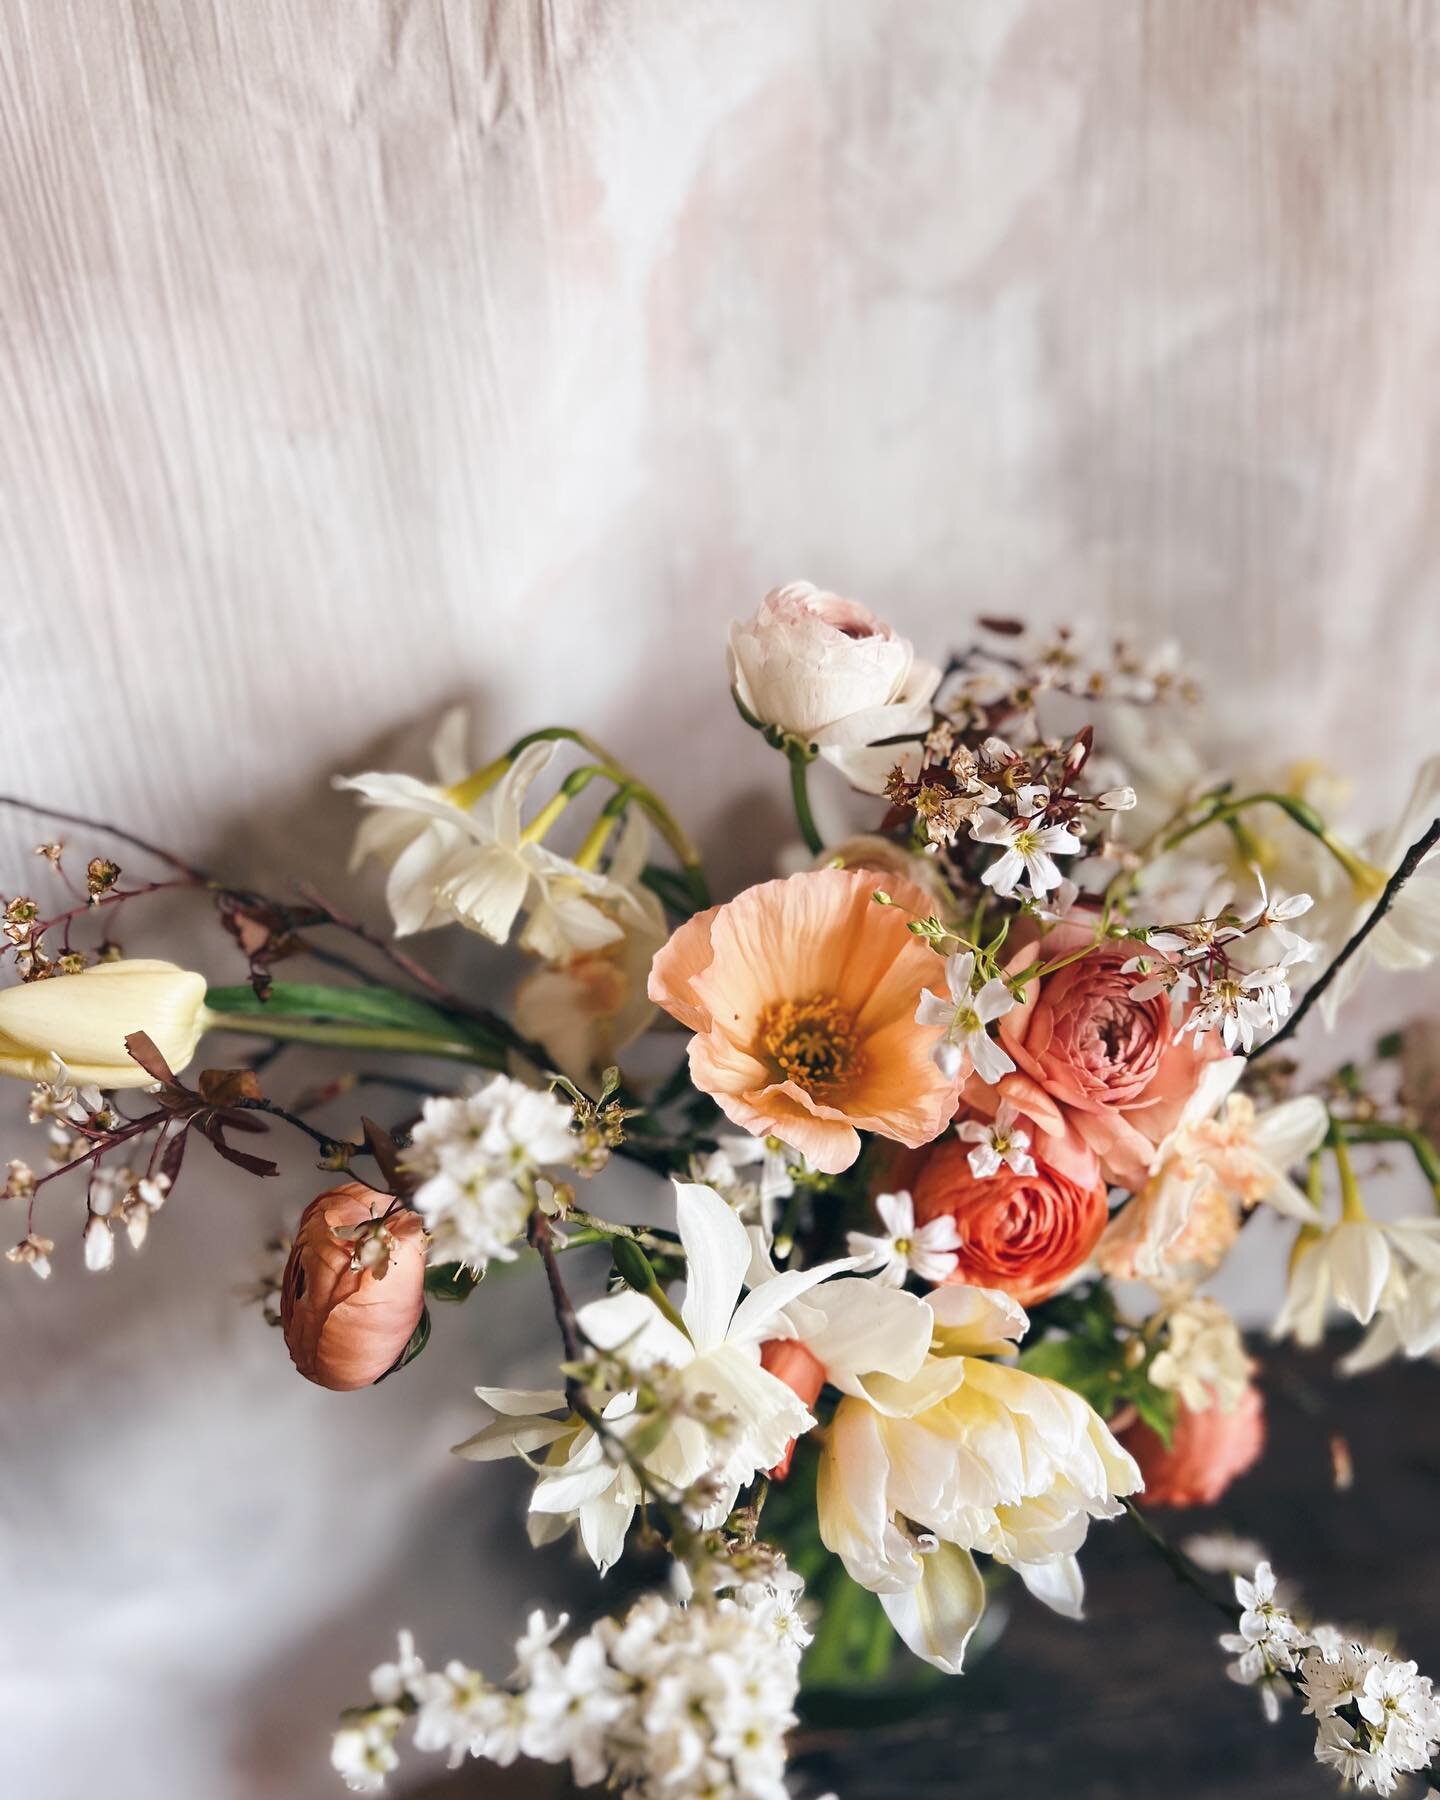 For Annie &amp; Jake 🤍✨🍑 @nancarrowfarmwedding last week - I loved working with their brief ✨🤍🍑

.
.
.
#weddingflowers #bouquetinspo #nancarrowfarmwedding #nancarrowfarm #underthefloralspell #flowersofinstagram #petalperfection #embracingtheseaso